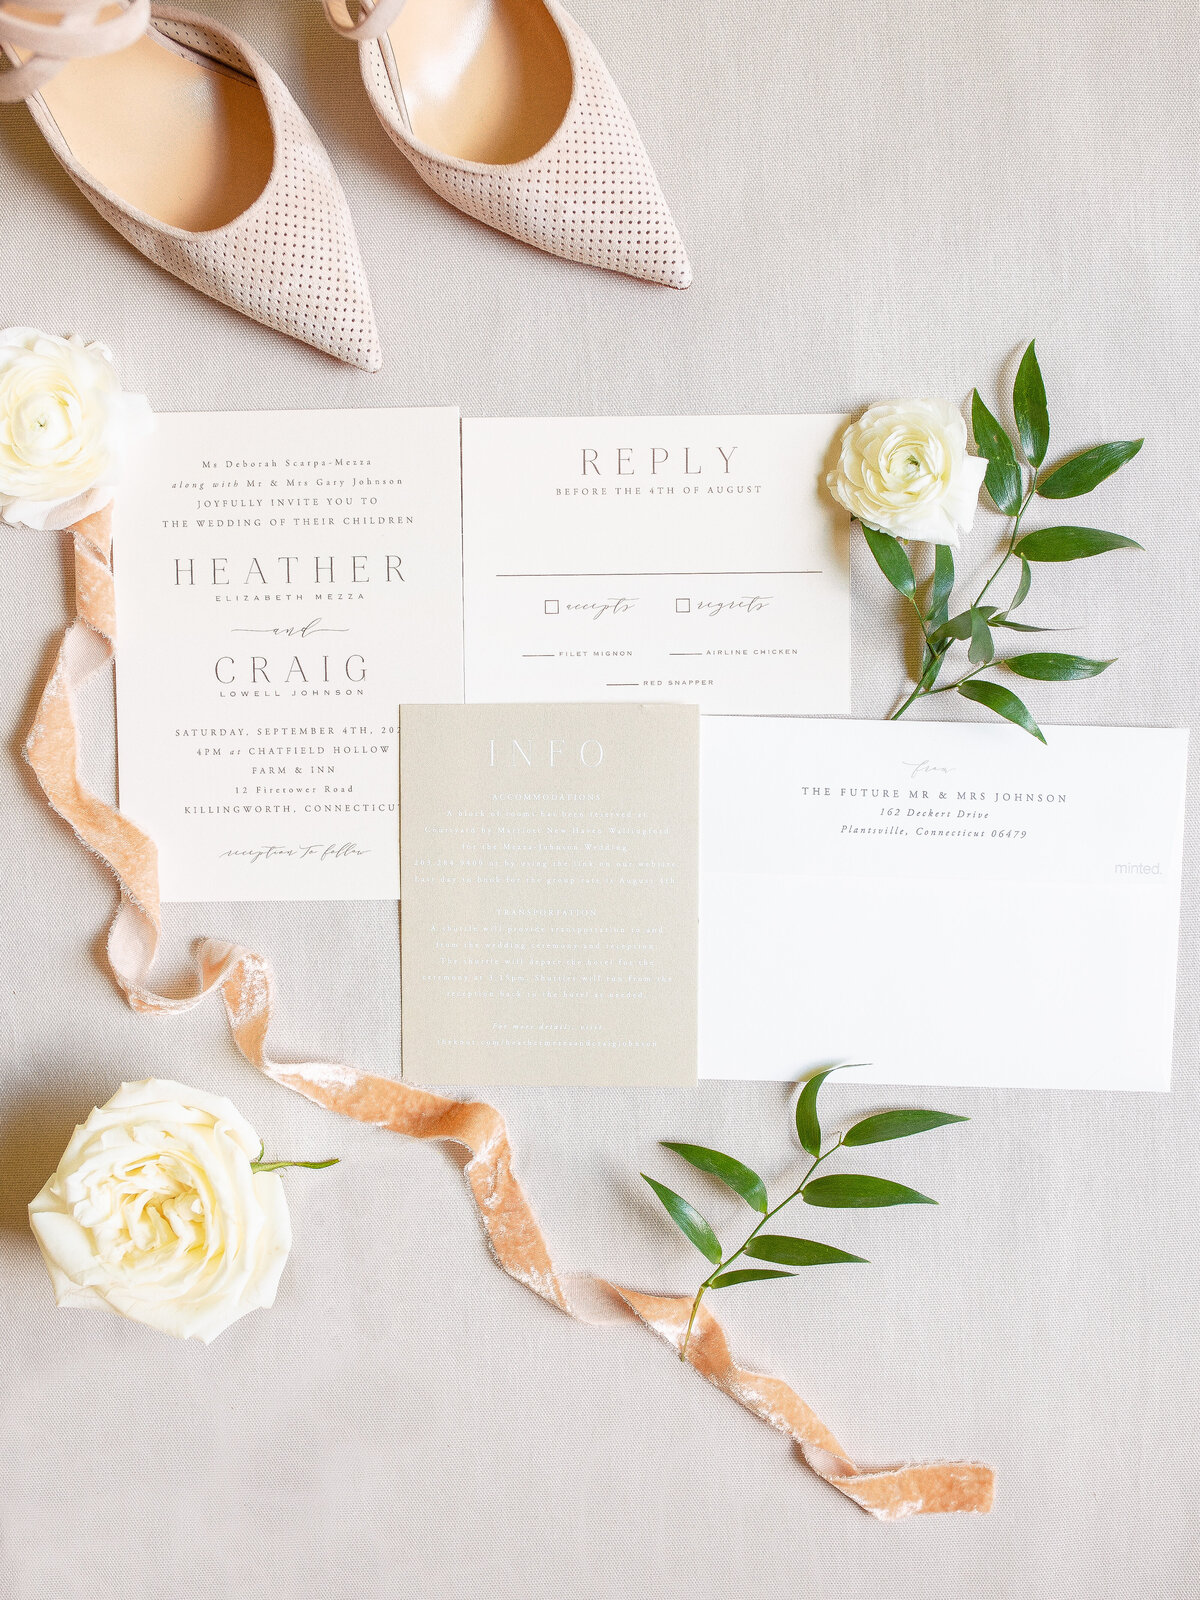 Minted invitation suite and bridal shoe details.